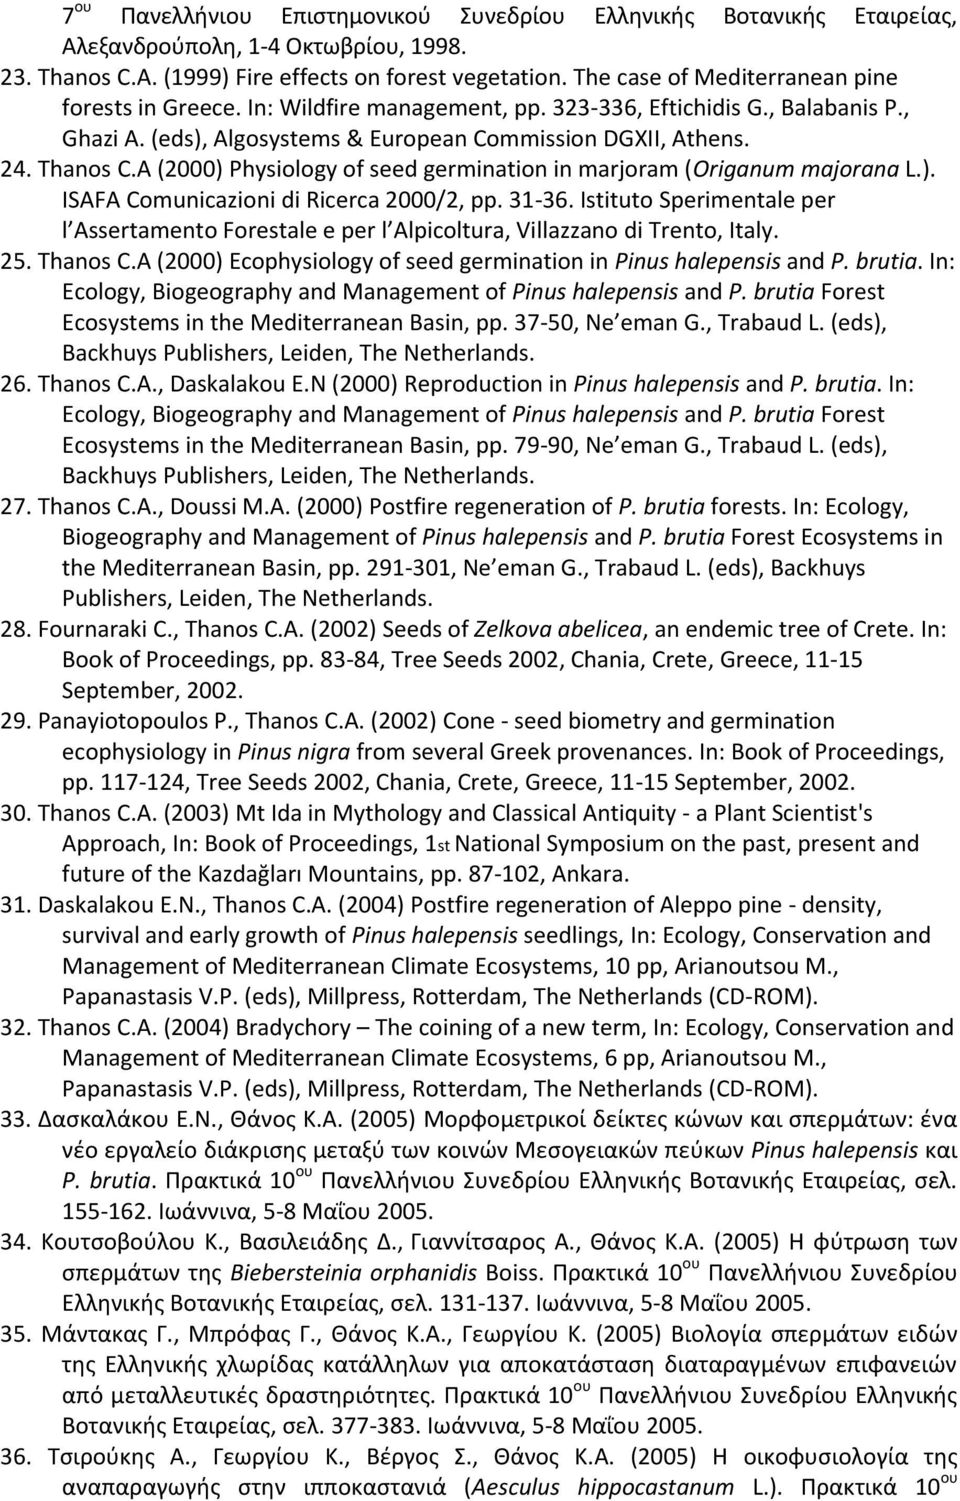 A (2000) Physiology of seed germination in marjoram (Origanum majorana L.). ISAFA Comunicazioni di Ricerca 2000/2, pp. 31-36.